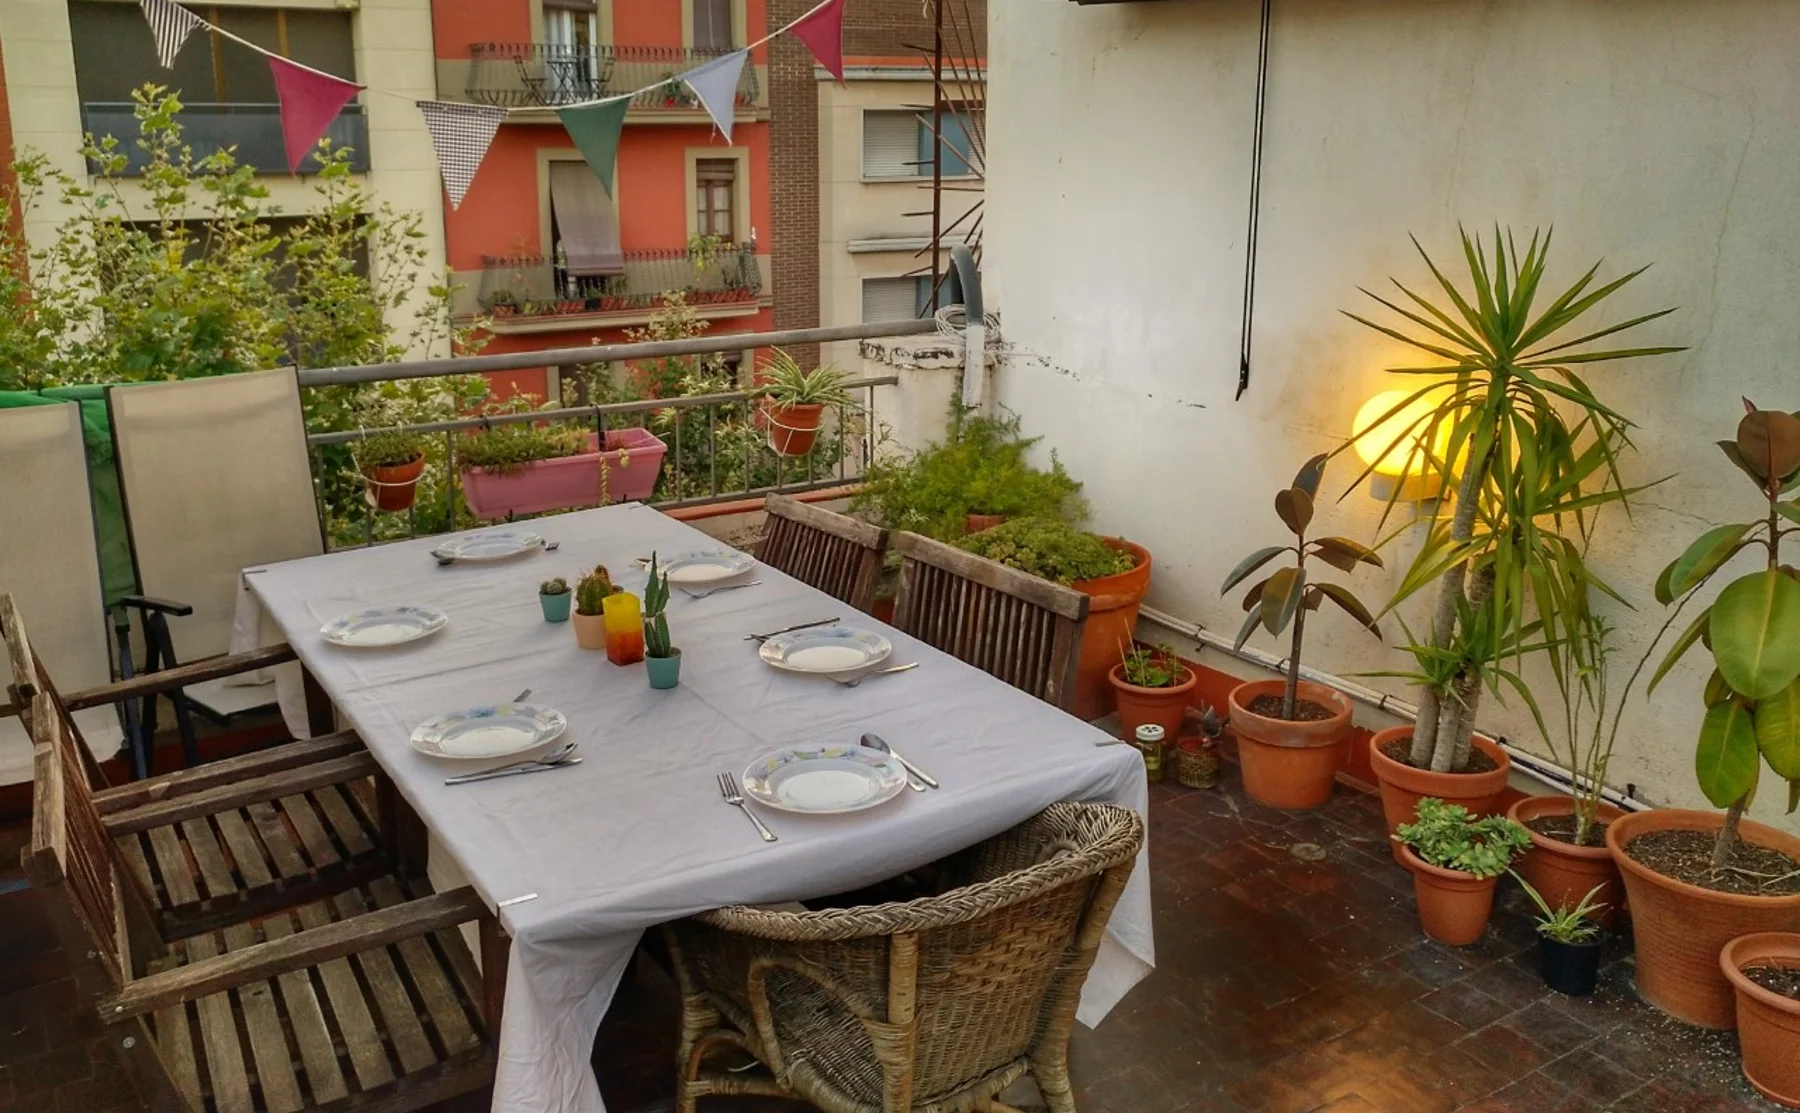 Italo-Galician dinner on a rooftop next to the Sagrada Familia - 1219412